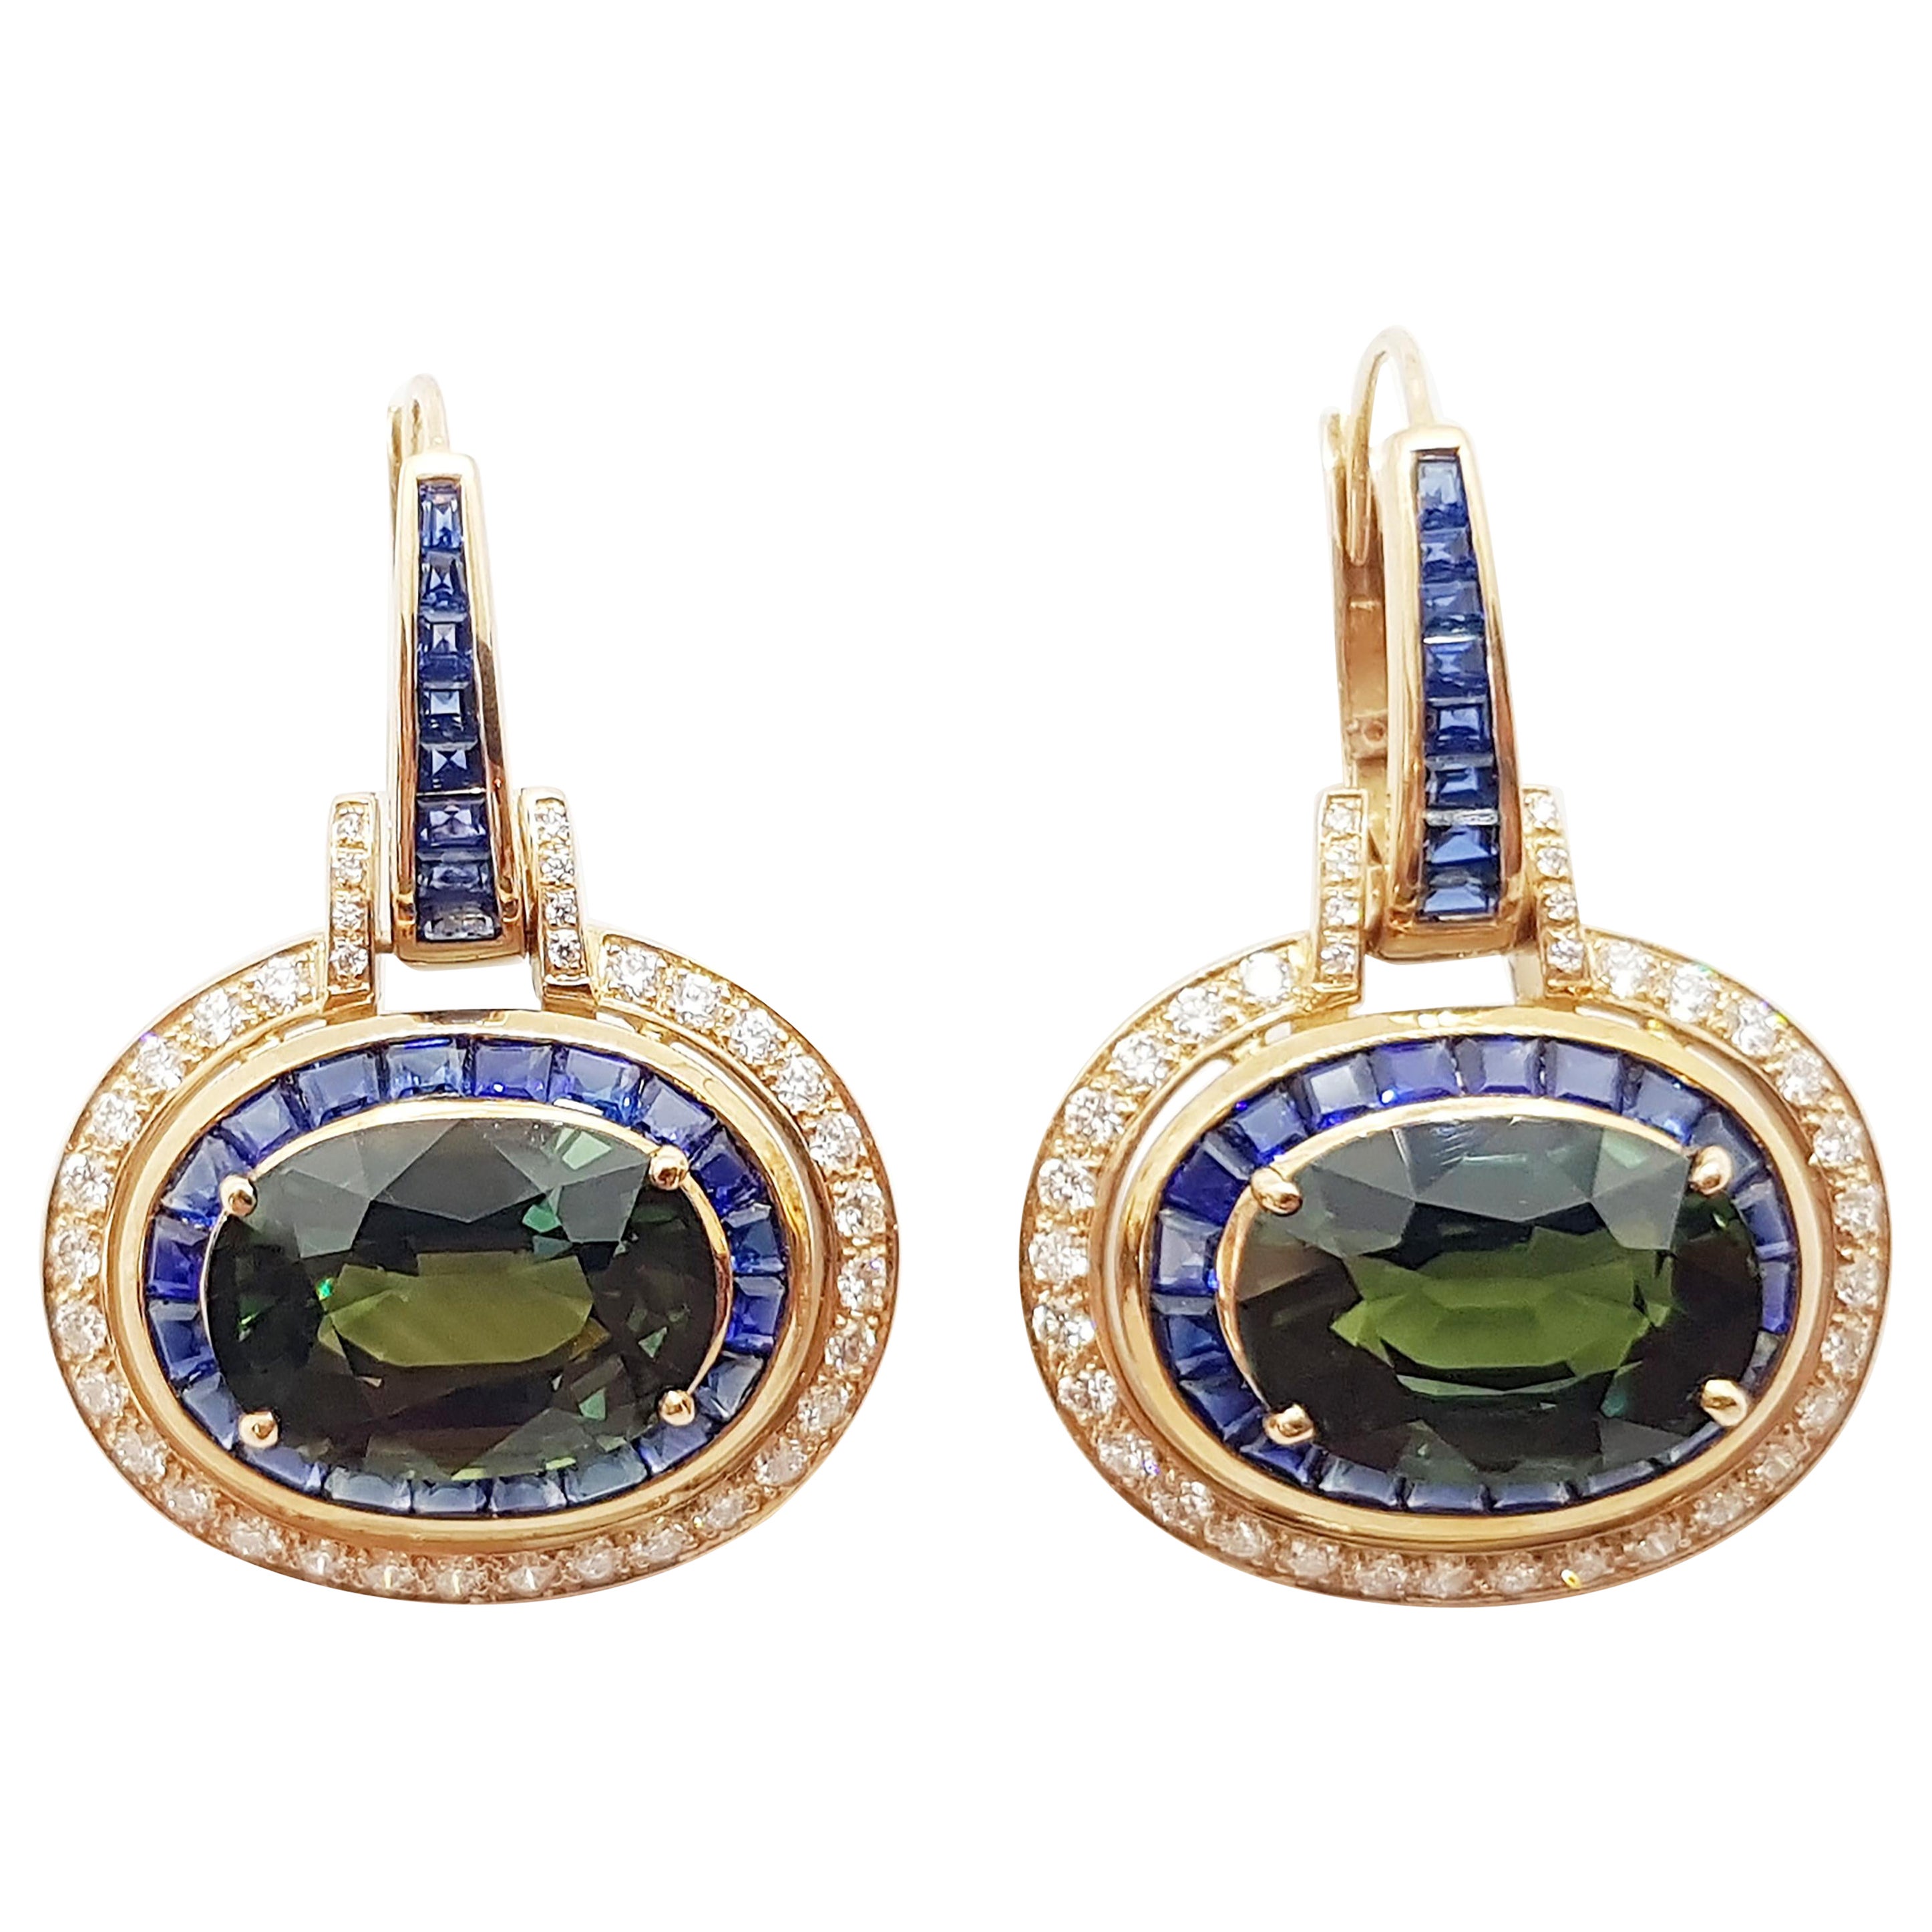  Ohrringe aus 18 Karat Roségold mit grünem Saphir, blauem Saphir und Diamant